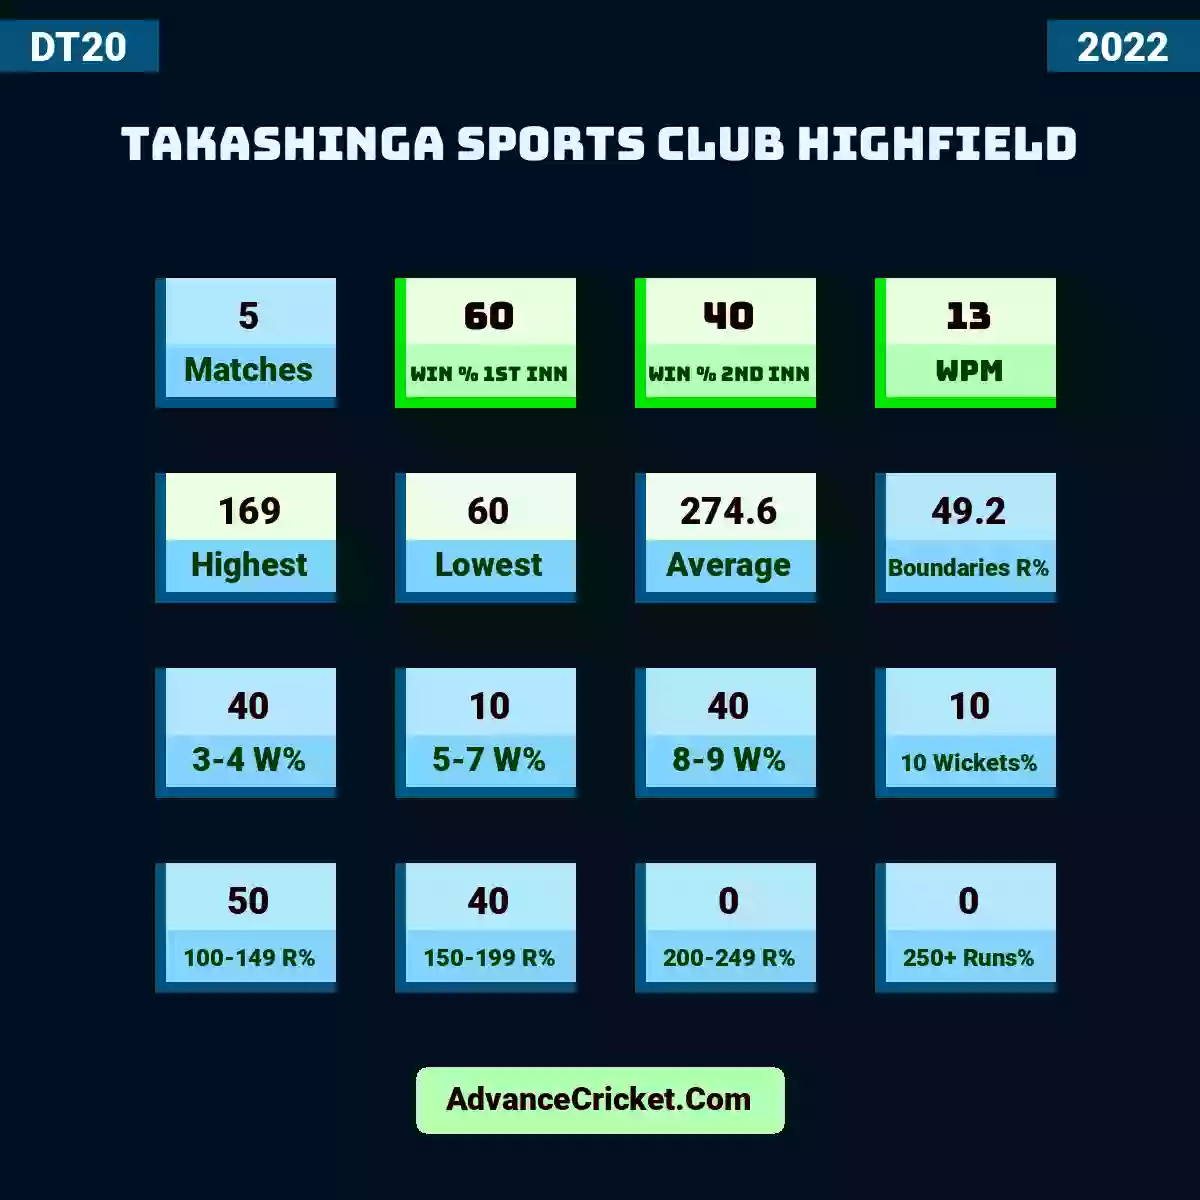 Image showing Takashinga Sports Club Highfield with Matches: 5, Win % 1st Inn: 60, Win % 2nd Inn: 40, WPM: 13, Highest: 169, Lowest: 60, Average: 274.6, Boundaries R%: 49.2, 3-4 W%: 40, 5-7 W%: 10, 8-9 W%: 40, 10 Wickets%: 10, 100-149 R%: 50, 150-199 R%: 40, 200-249 R%: 0, 250+ Runs%: 0.